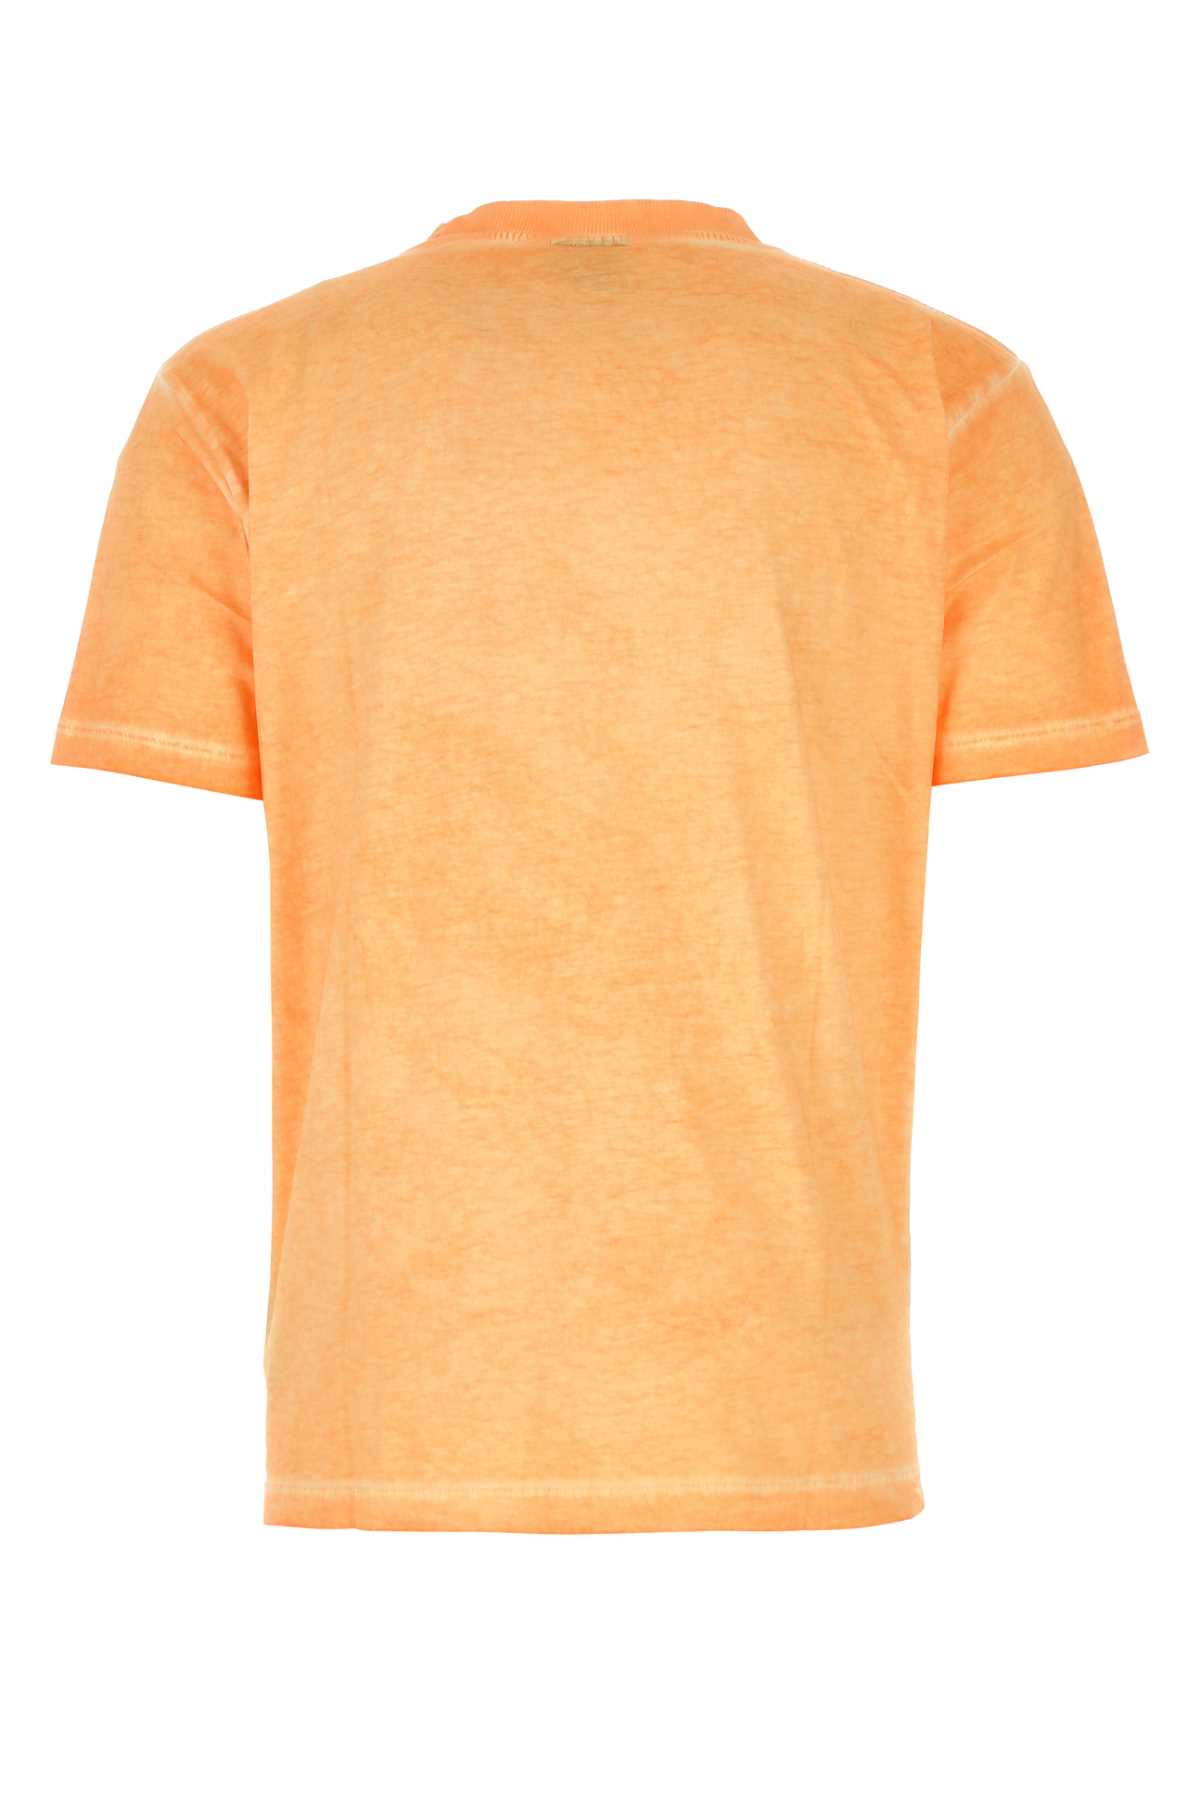 Marcelo Burlon County Of Milan Melange Orange Cotton T-shirt In Orangered